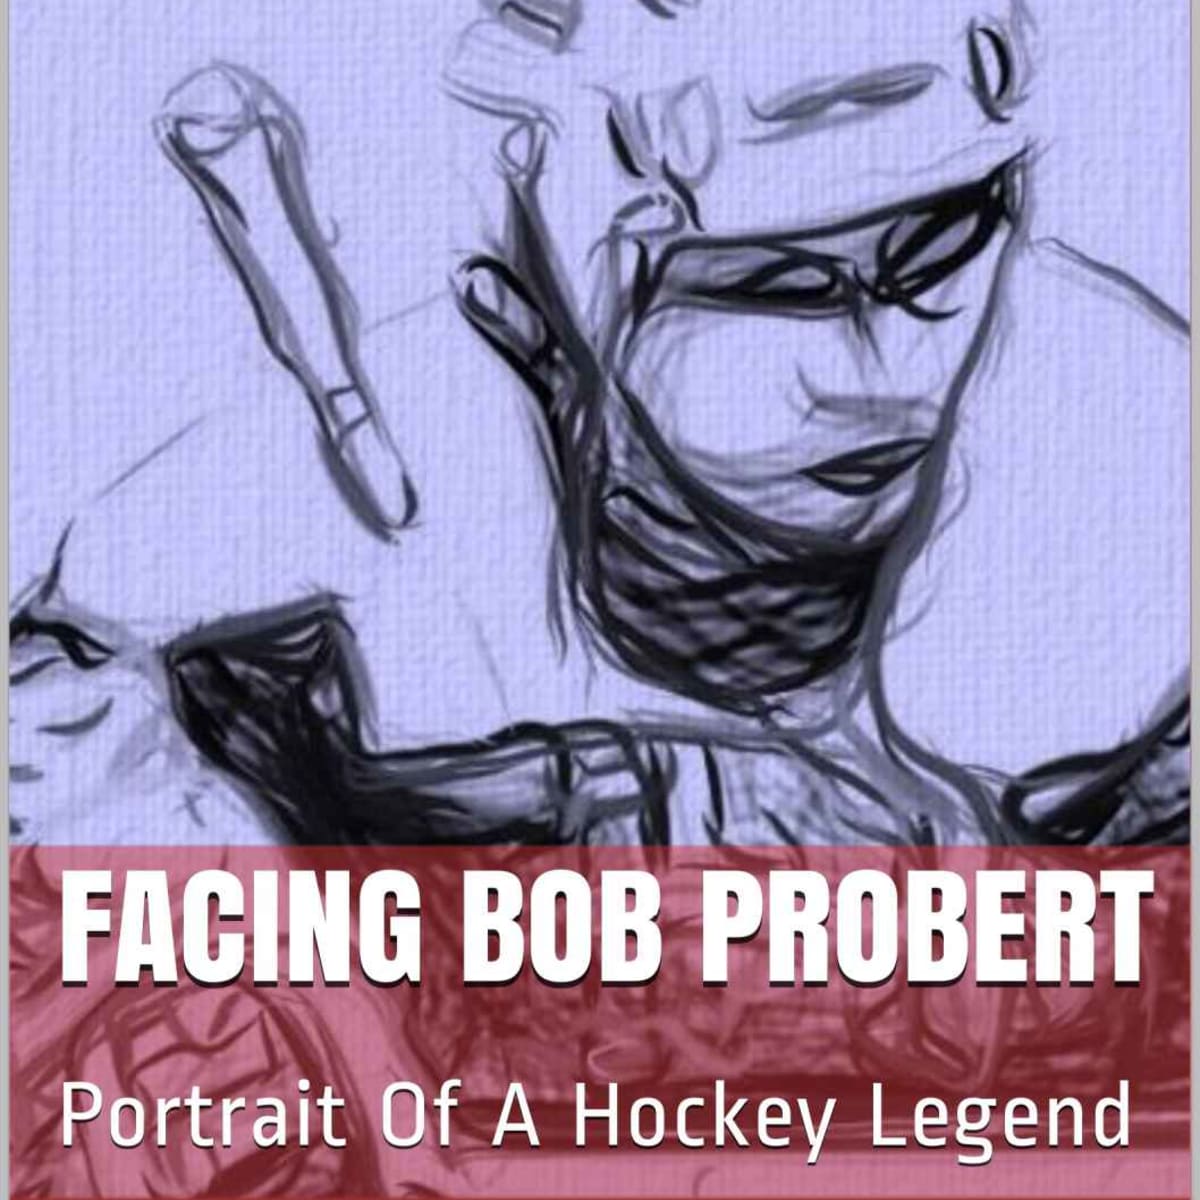 Proof that Bob Probert was NHL heavyweight fight champ 